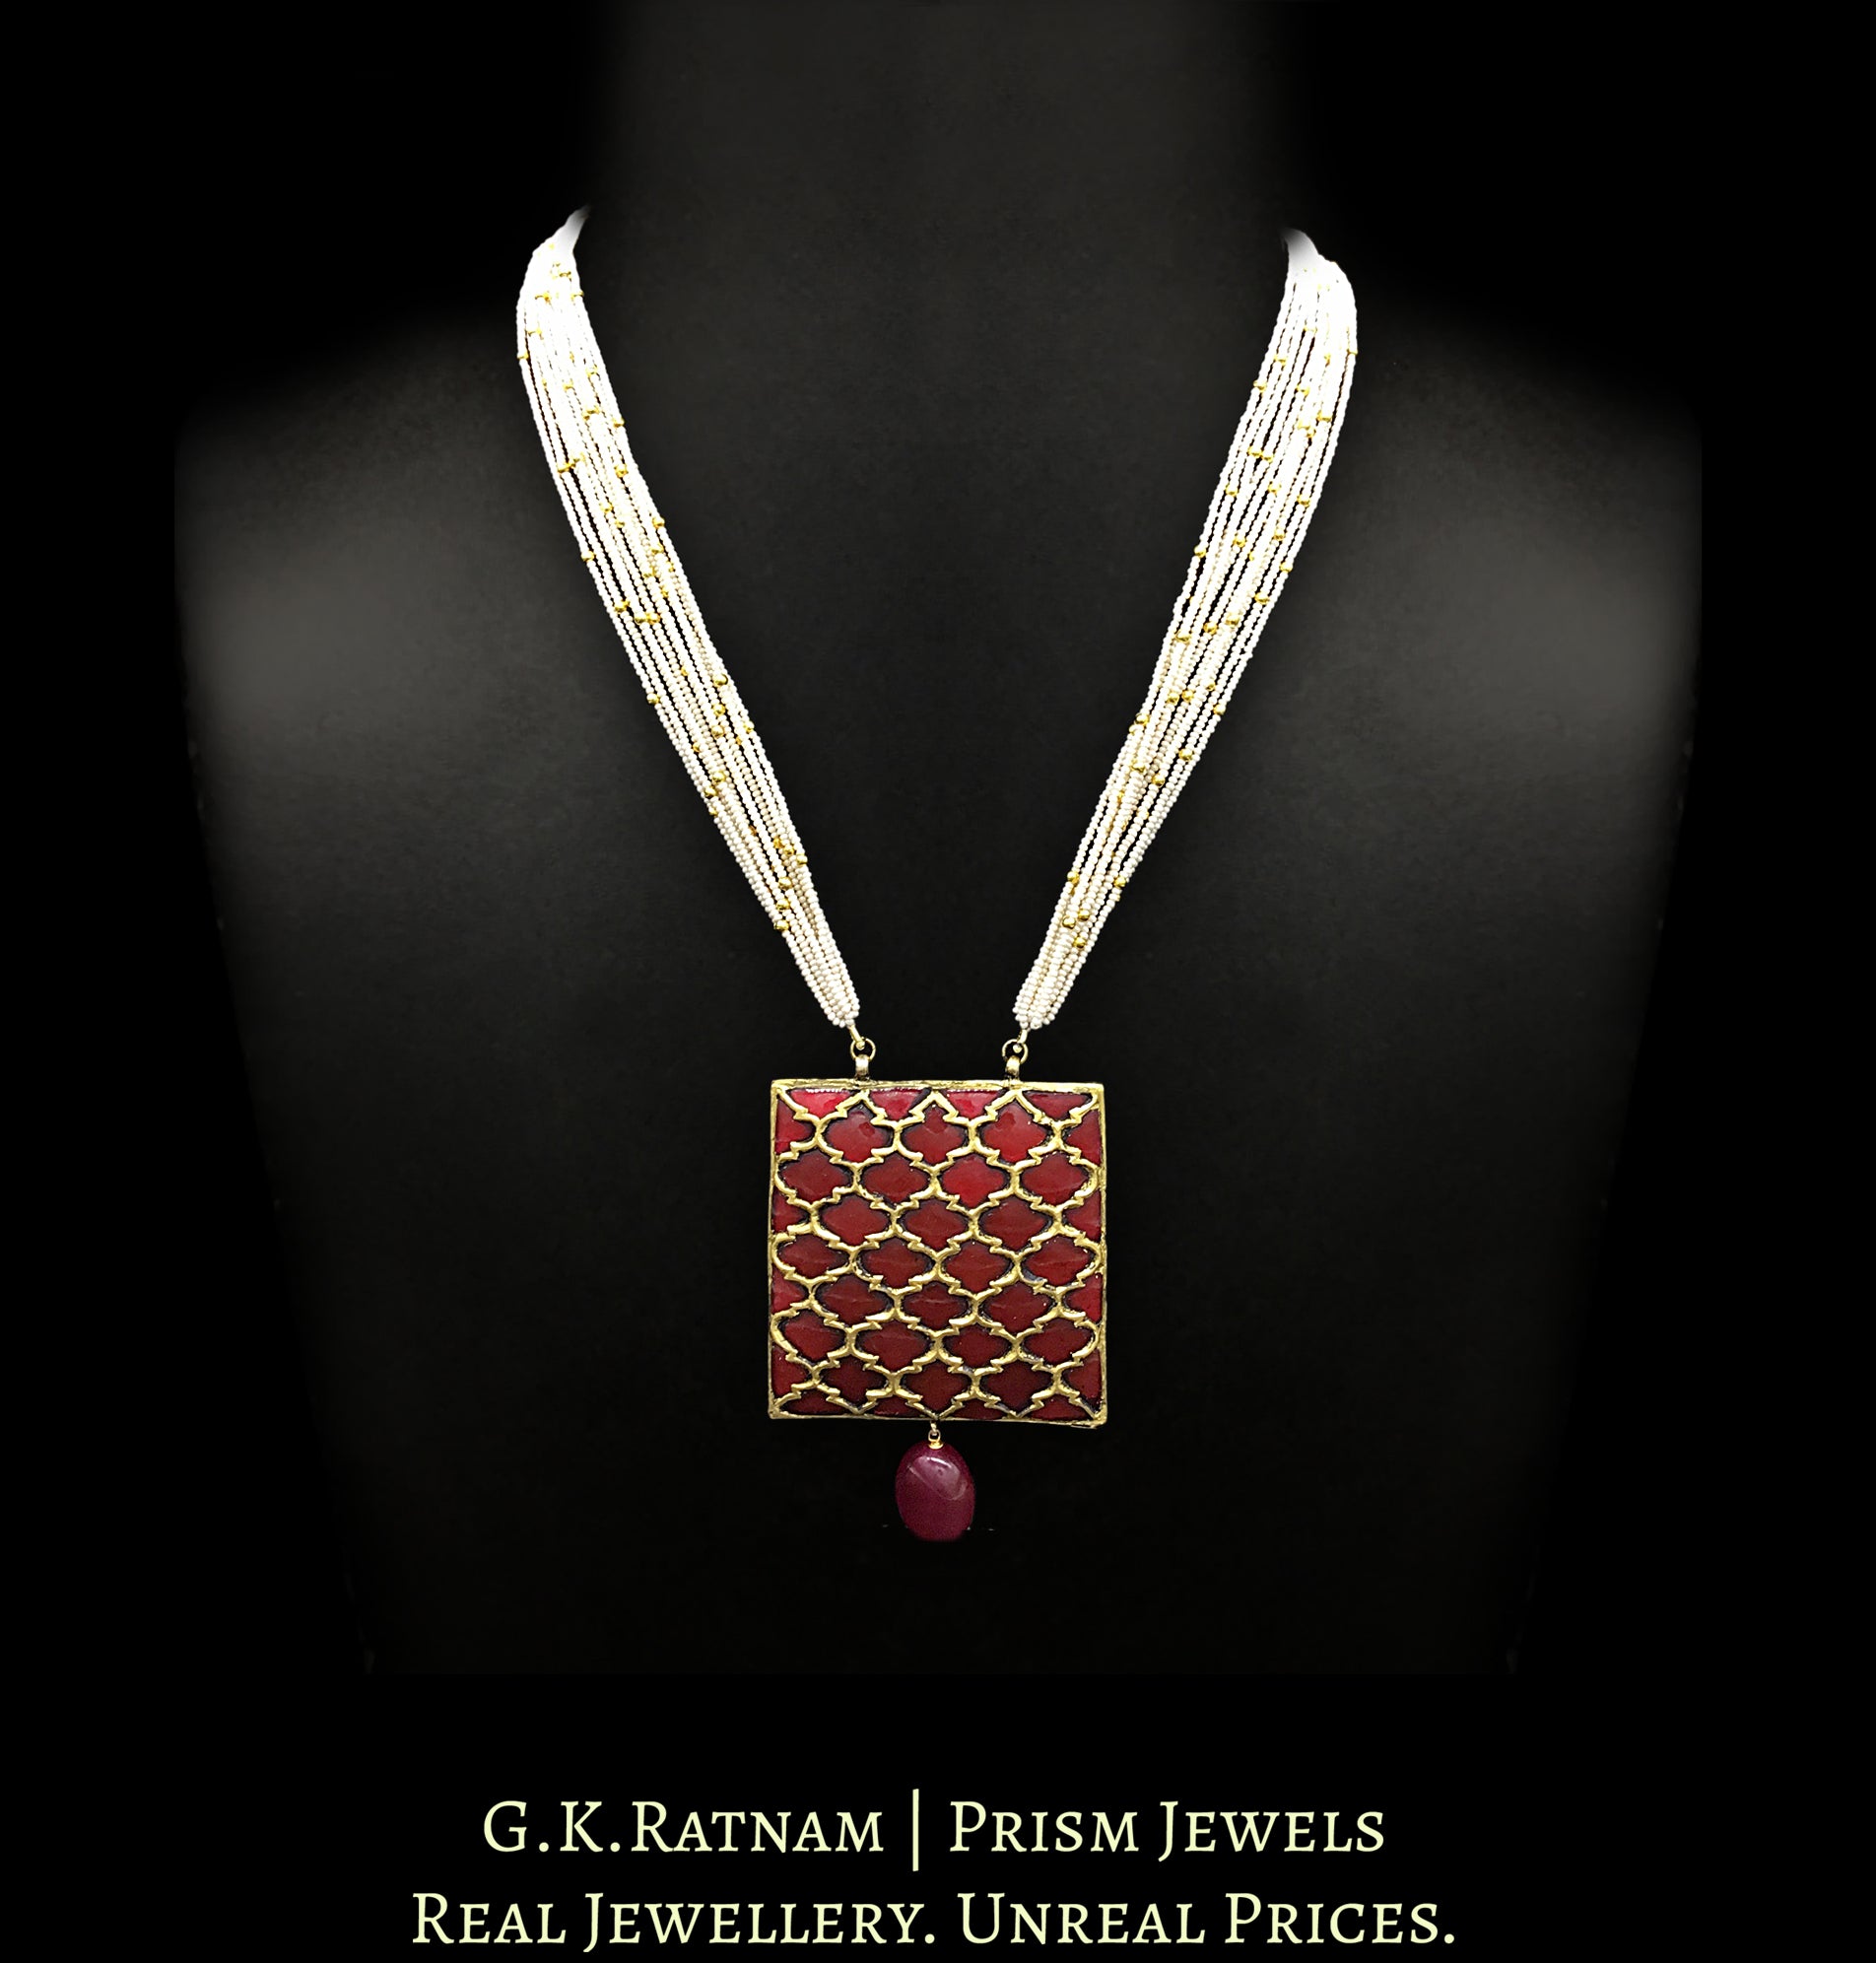 23k Gold and Diamond Polki Reversible Navratna Pendant with Chid Pearl bunches - G. K. Ratnam